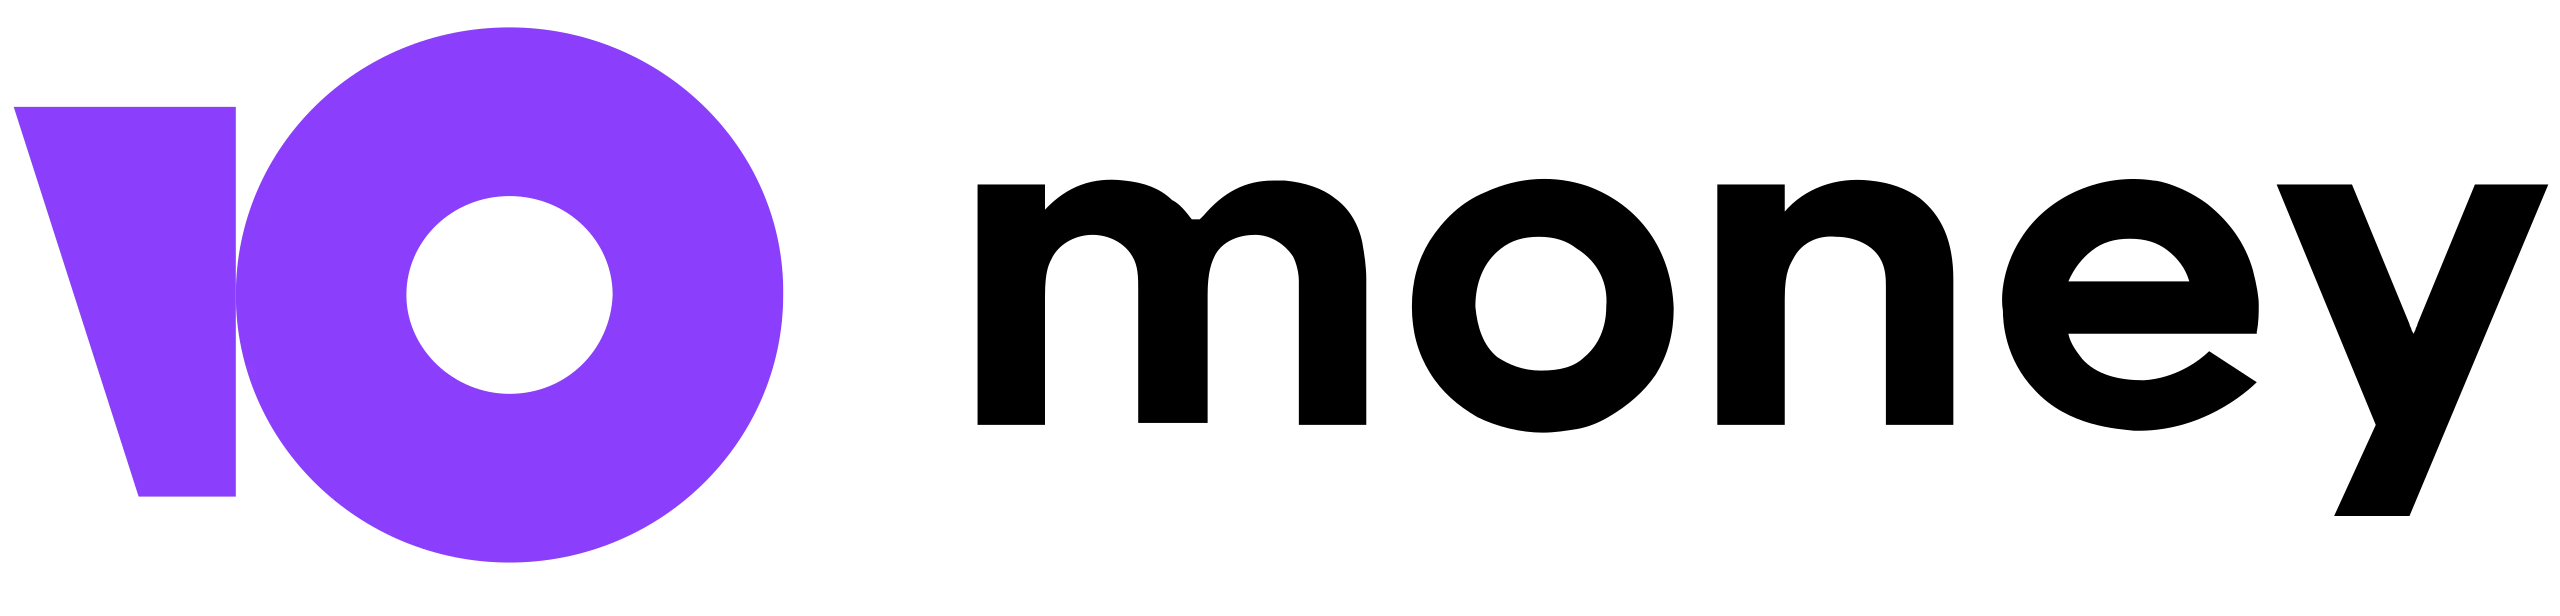 yoomoney logo